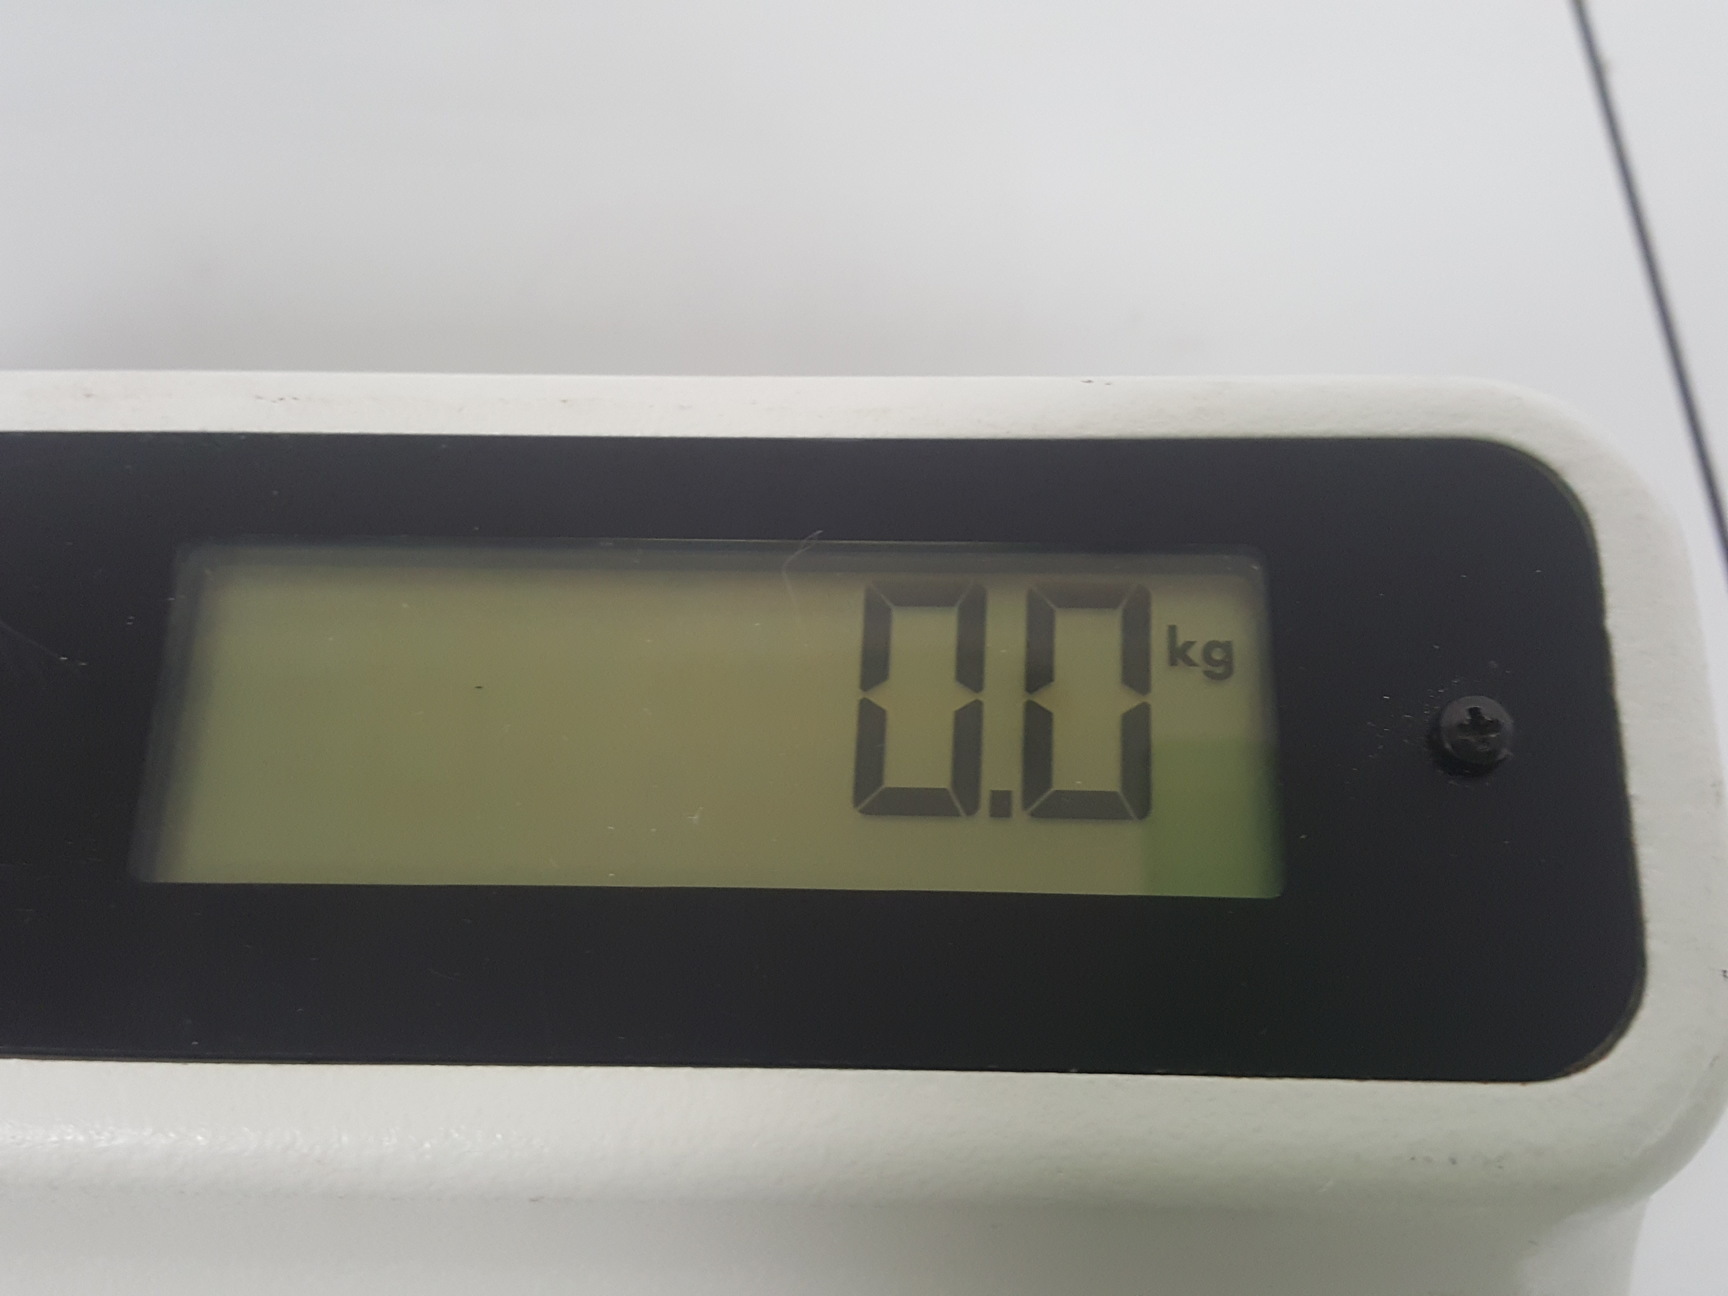 Seca Medical 770 Personal Scale Bathroom Weighing